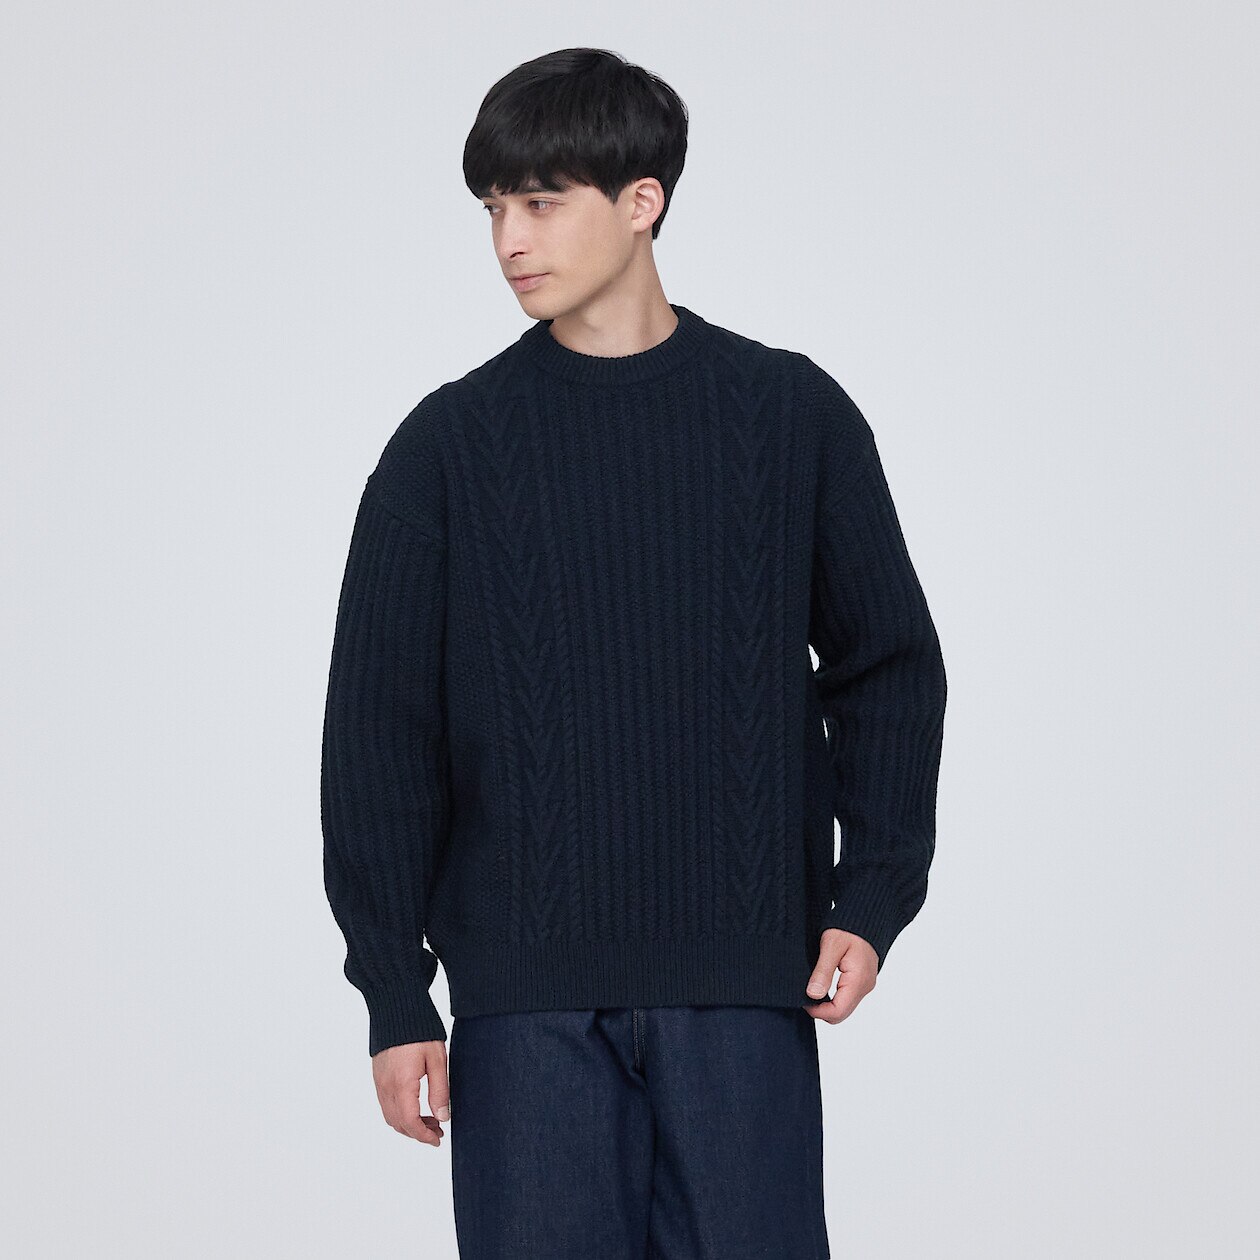 Shop Merino Wool Cable Stitch Sweater online | Muji UAE